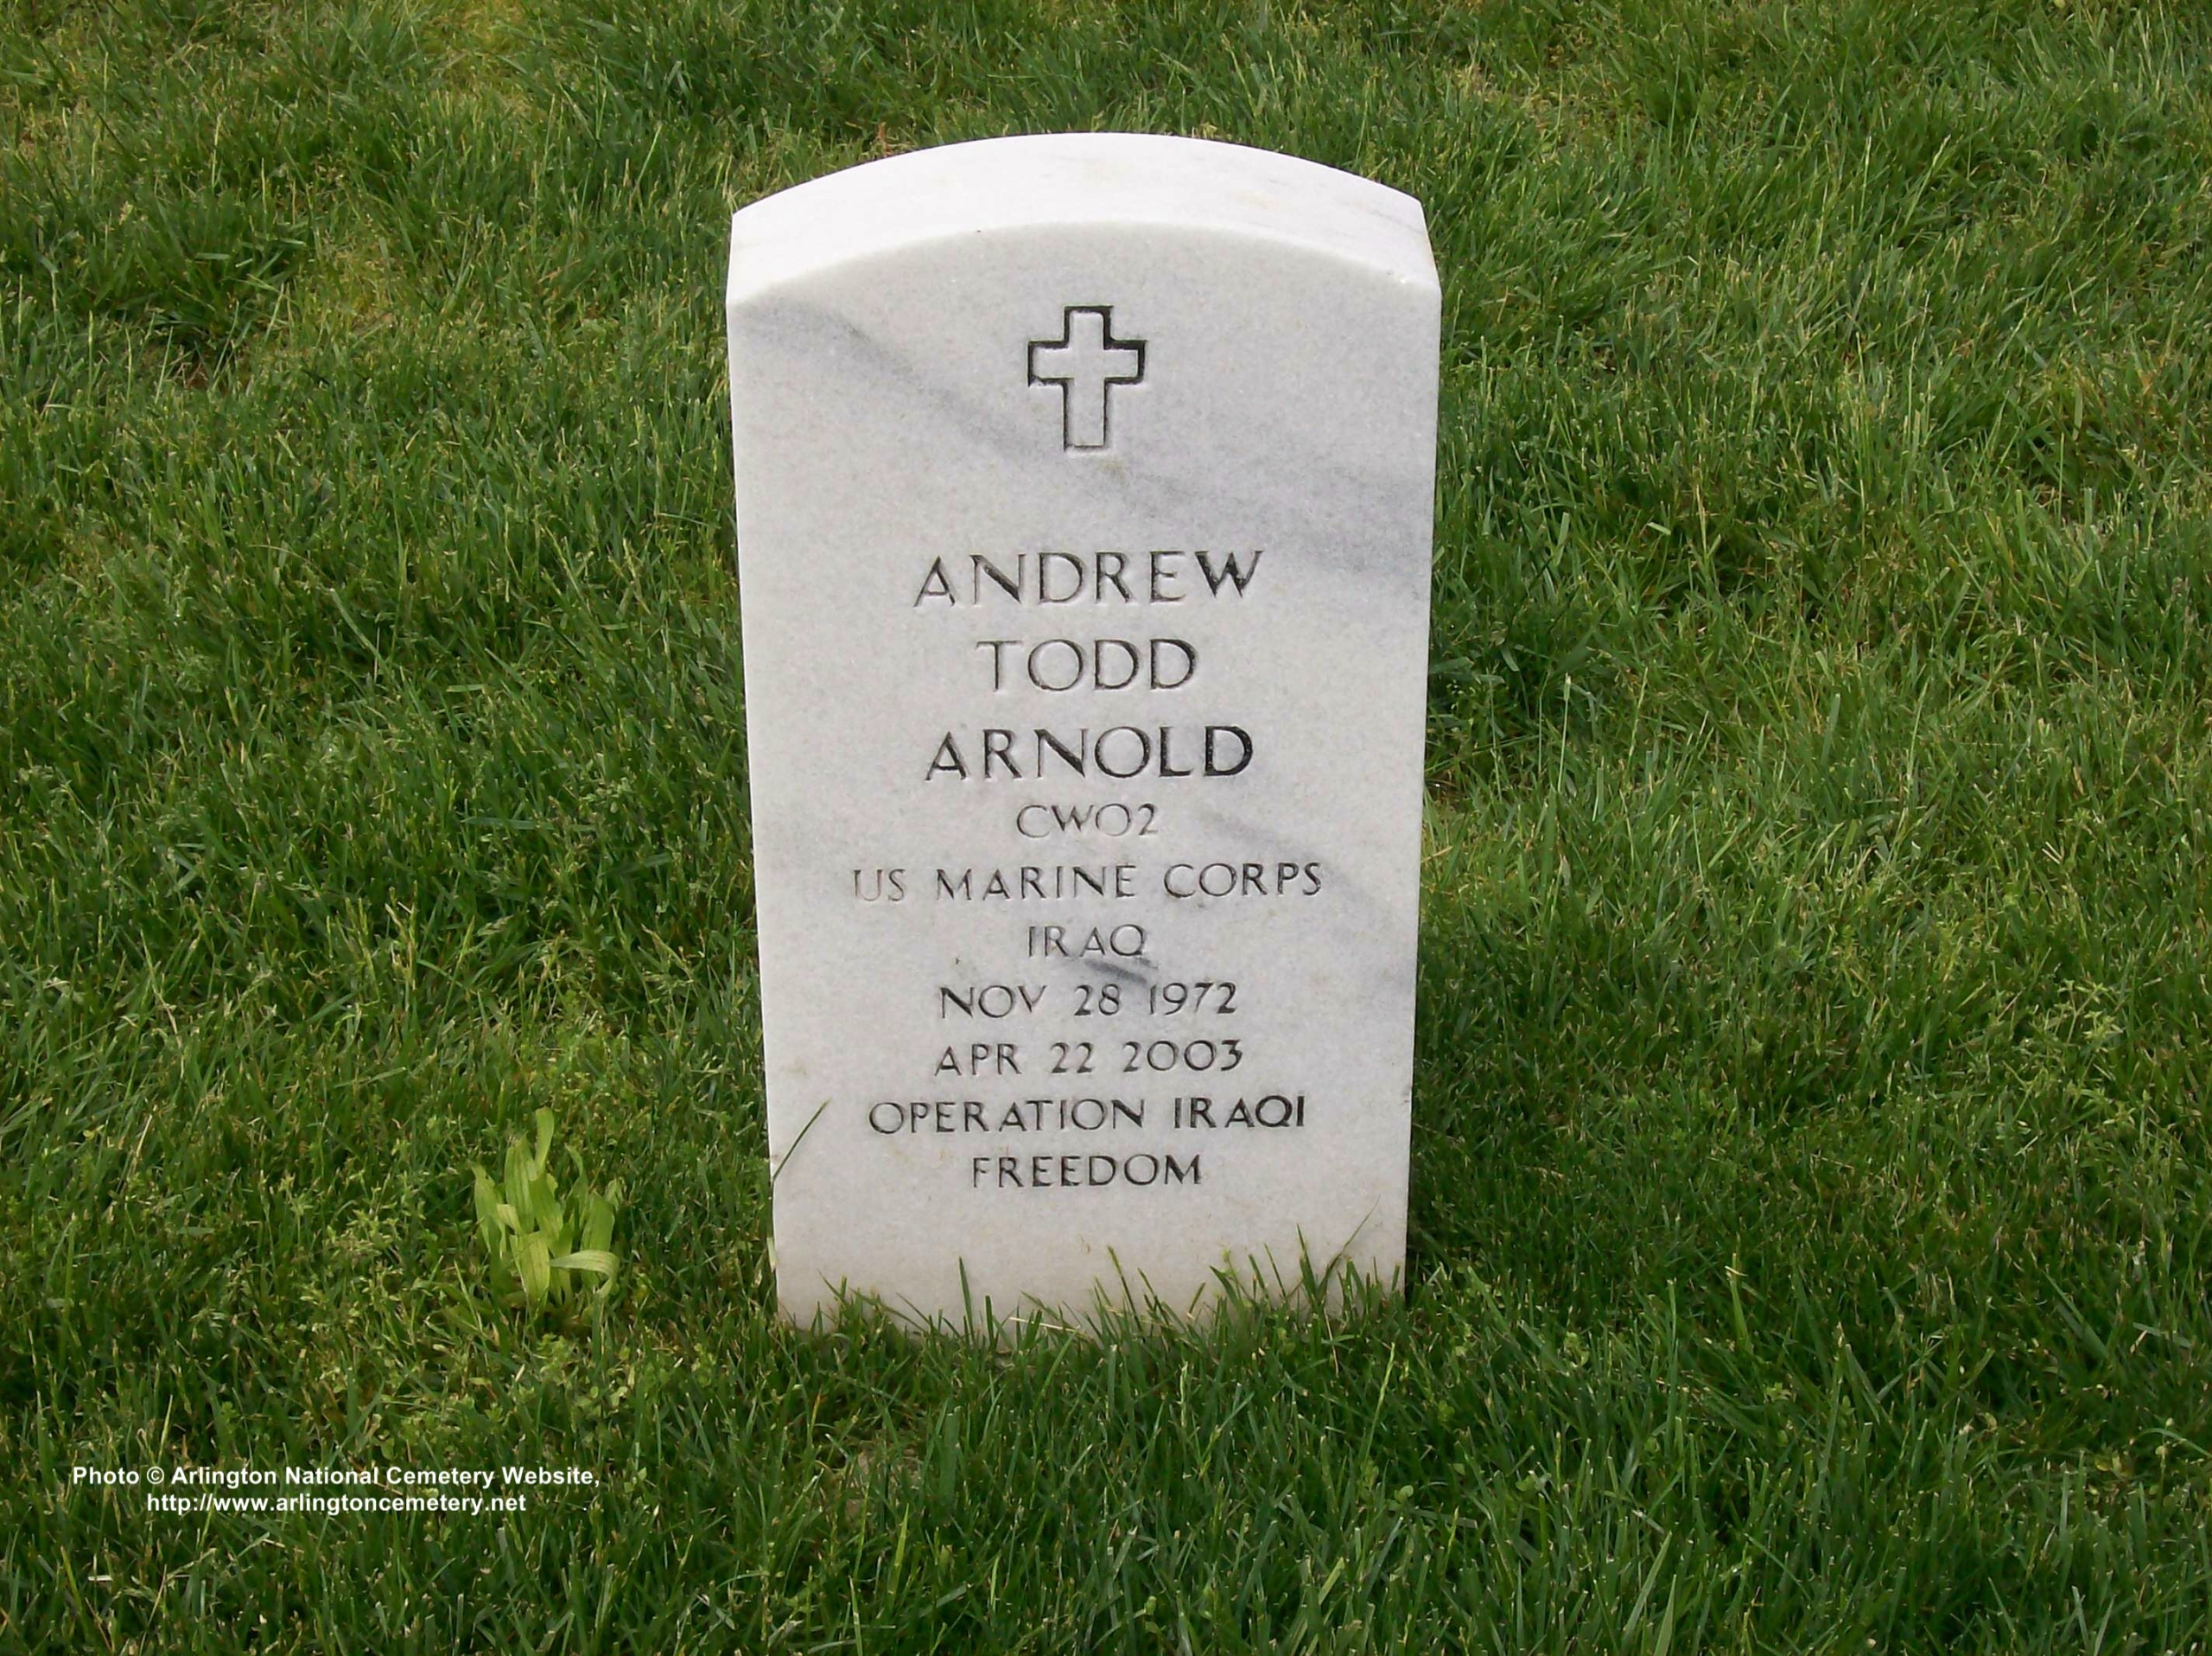 atarnold-gravesite-photo-may-2008-001